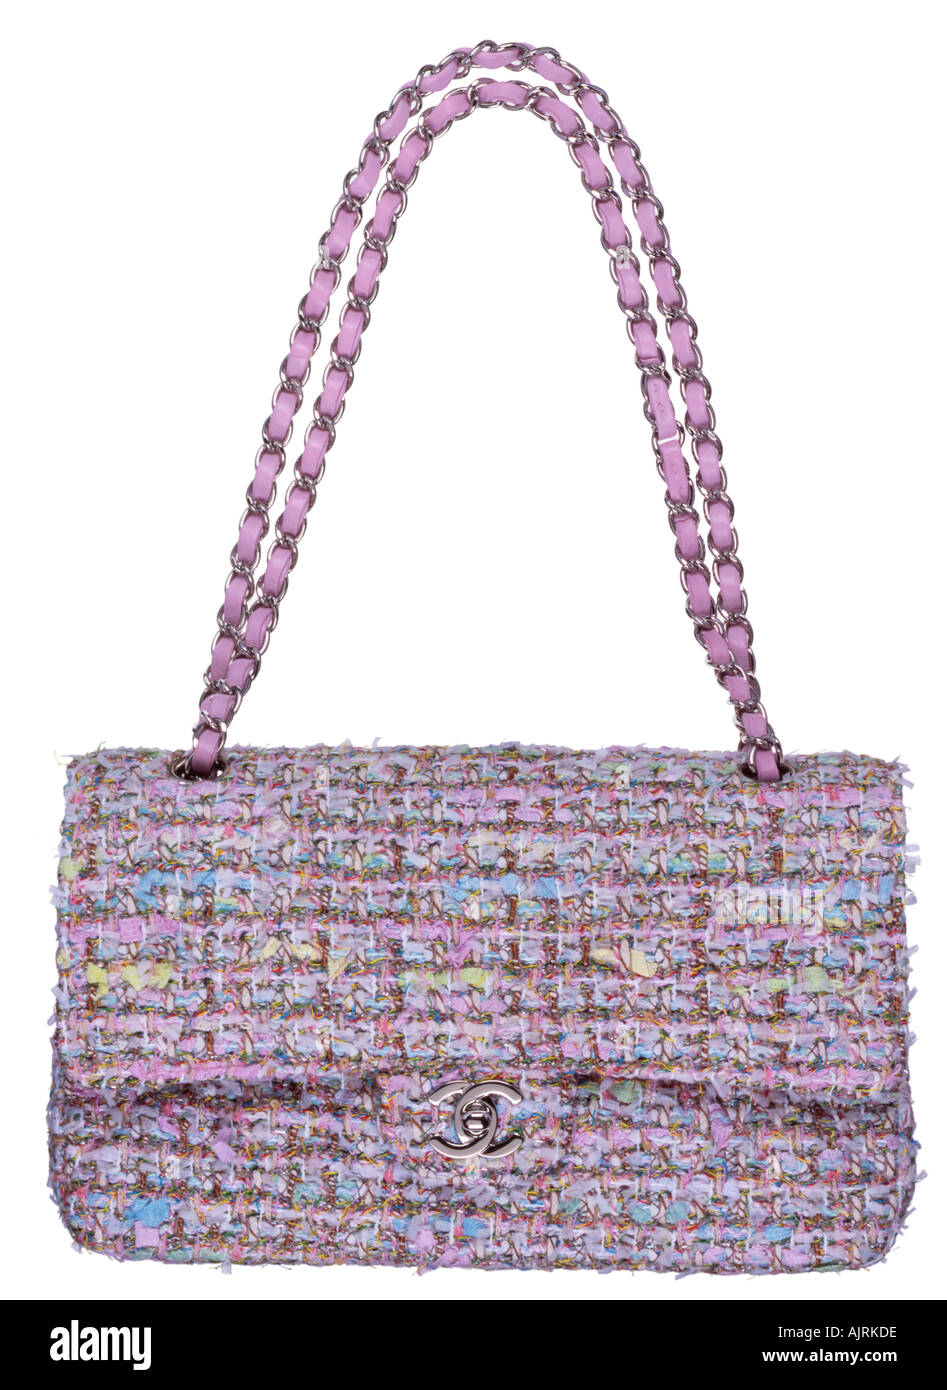 Women's tweed handbag by Chanel Stock Photo - Alamy